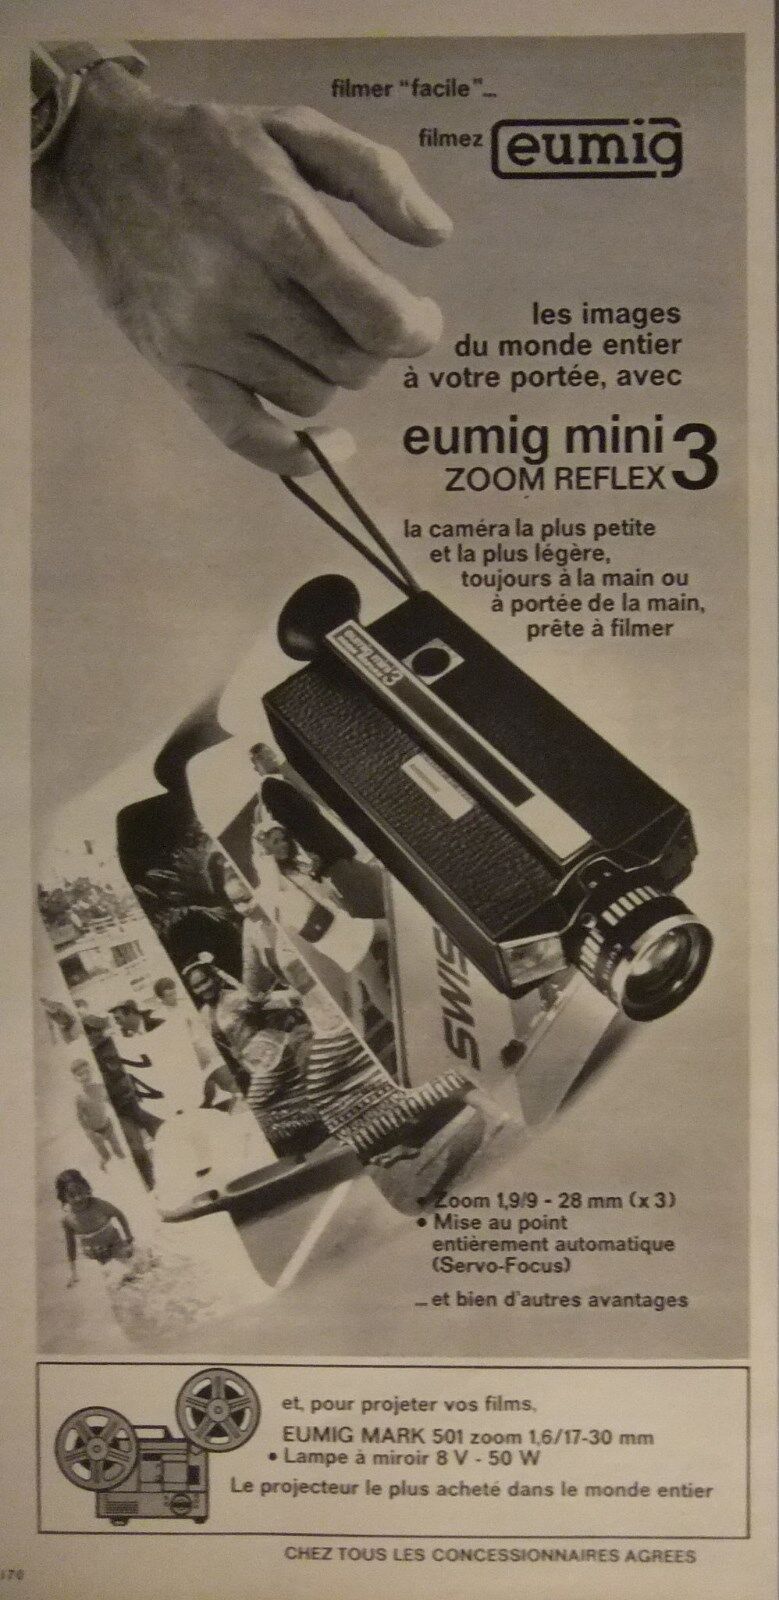 1972 FILM EUMIG MINI ZOOM REGLEX 3 EUMIG MARK 501 ADVERTISEMENT - ADVERTISING